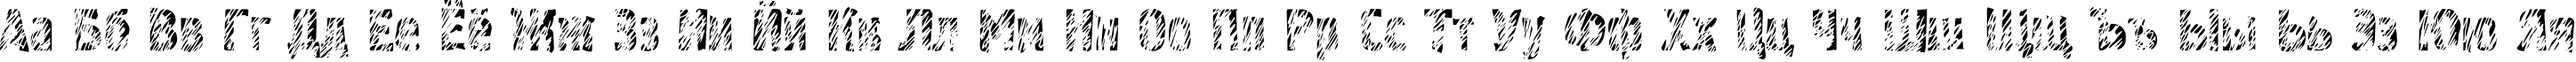 Пример написания русского алфавита шрифтом GraffitiThree